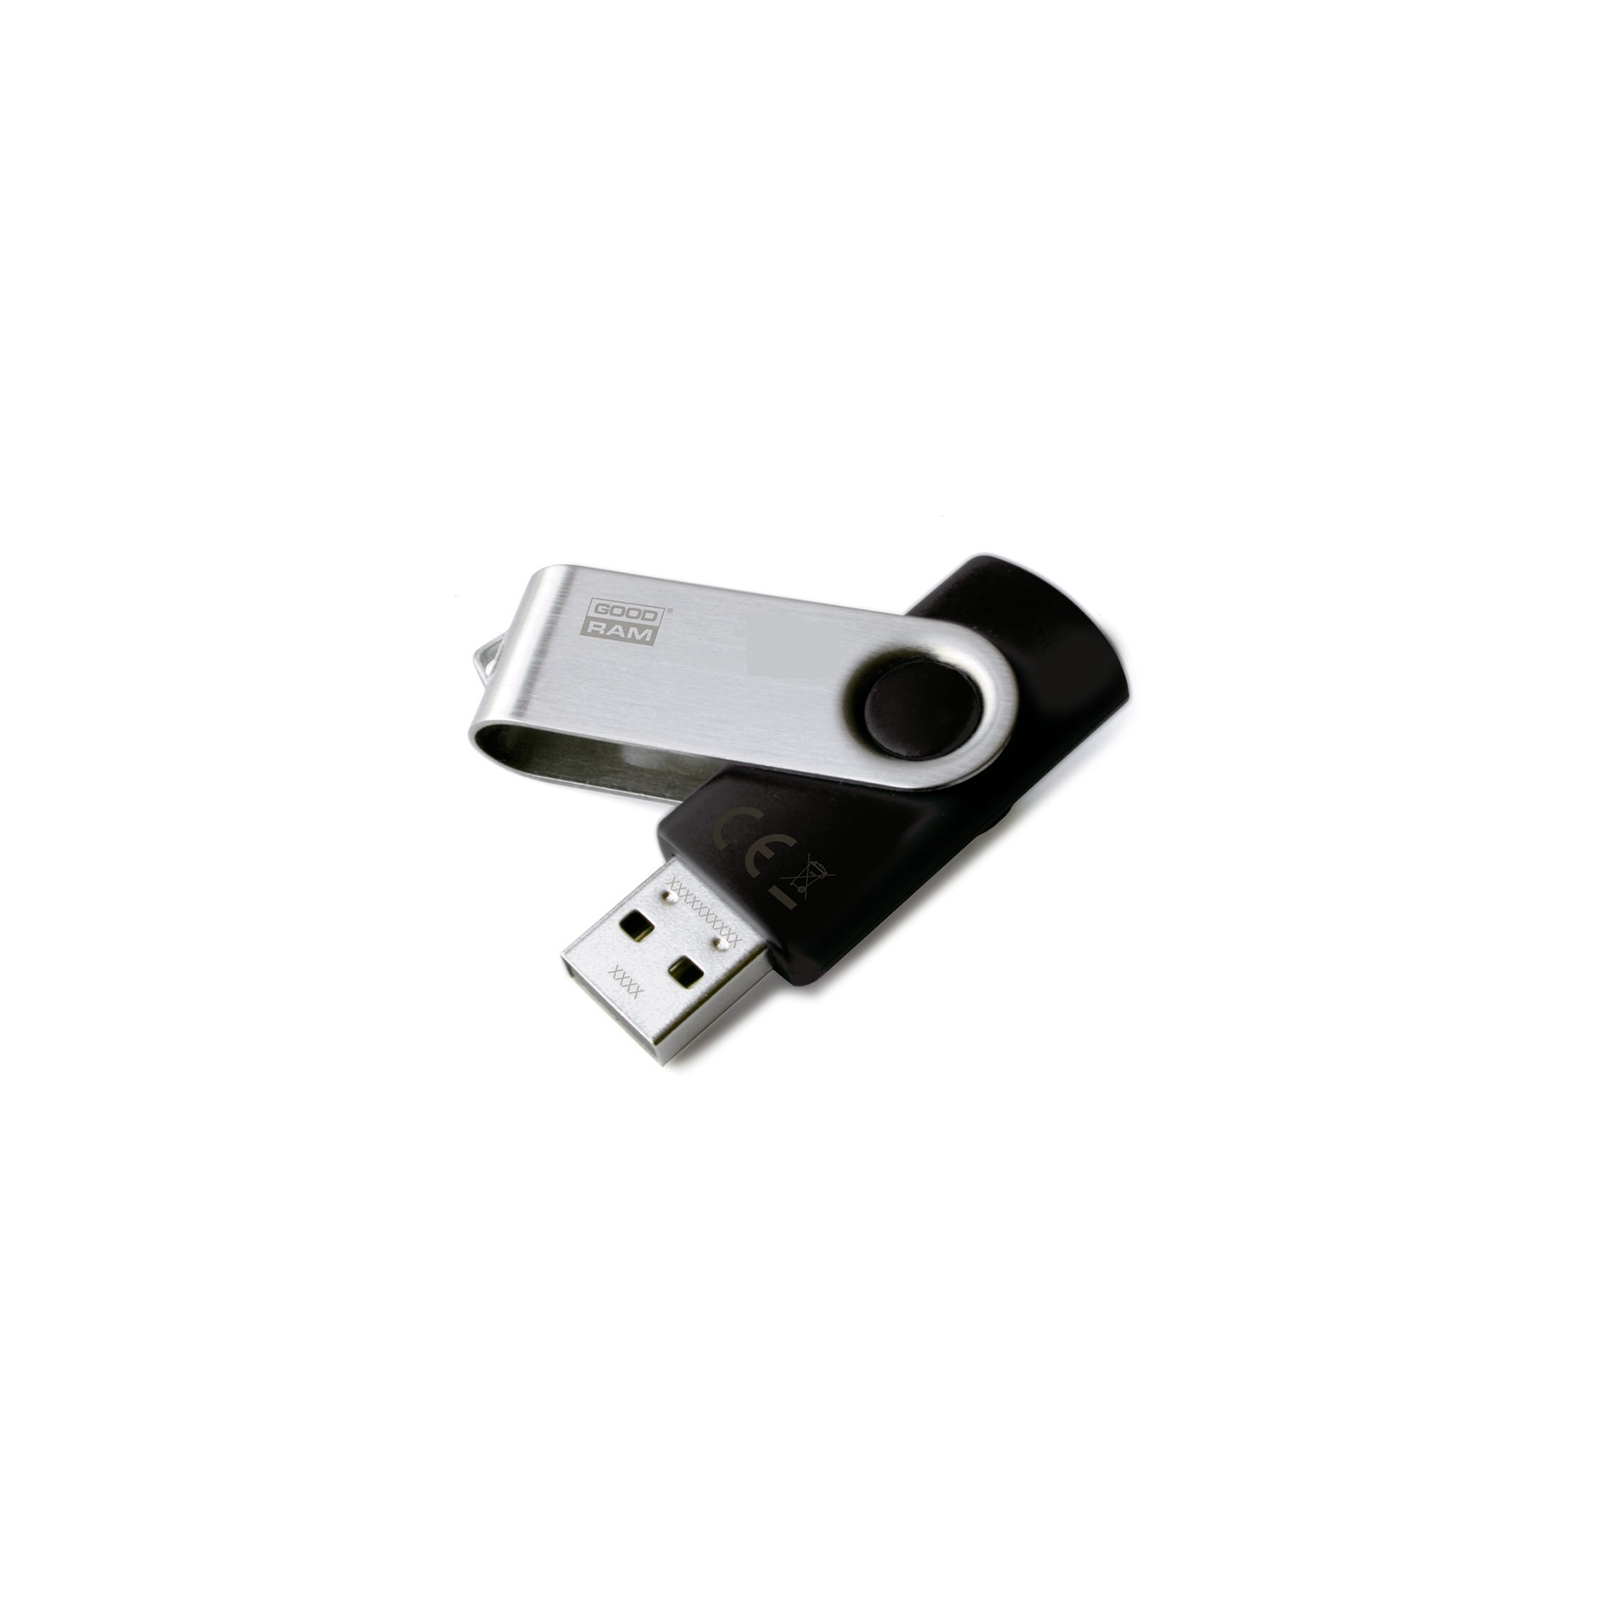 USB флеш накопитель Goodram 64GB Twister Black USB 2.0 (UTS2-0640K0R11) изображение 2